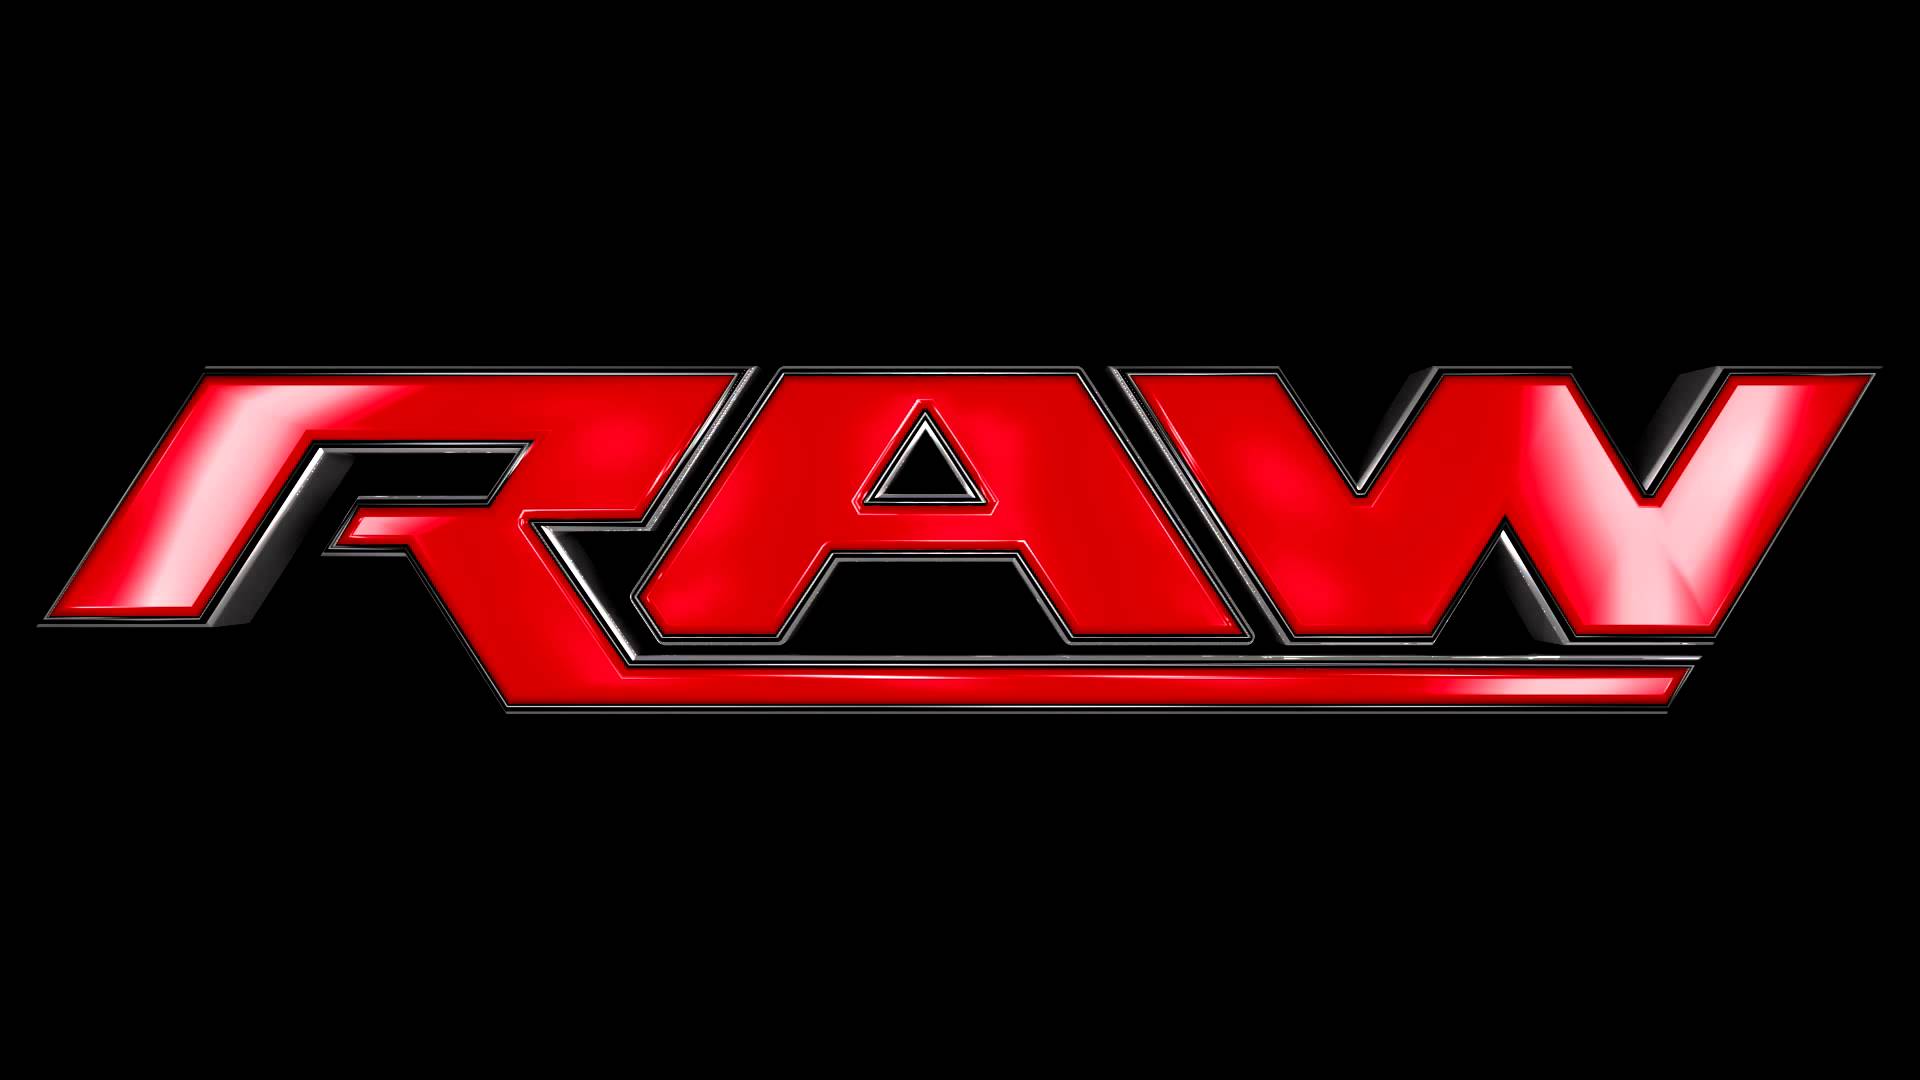 WWE RAW LOGO HQ RENDER [DOWNLOAD] [FULL HD]